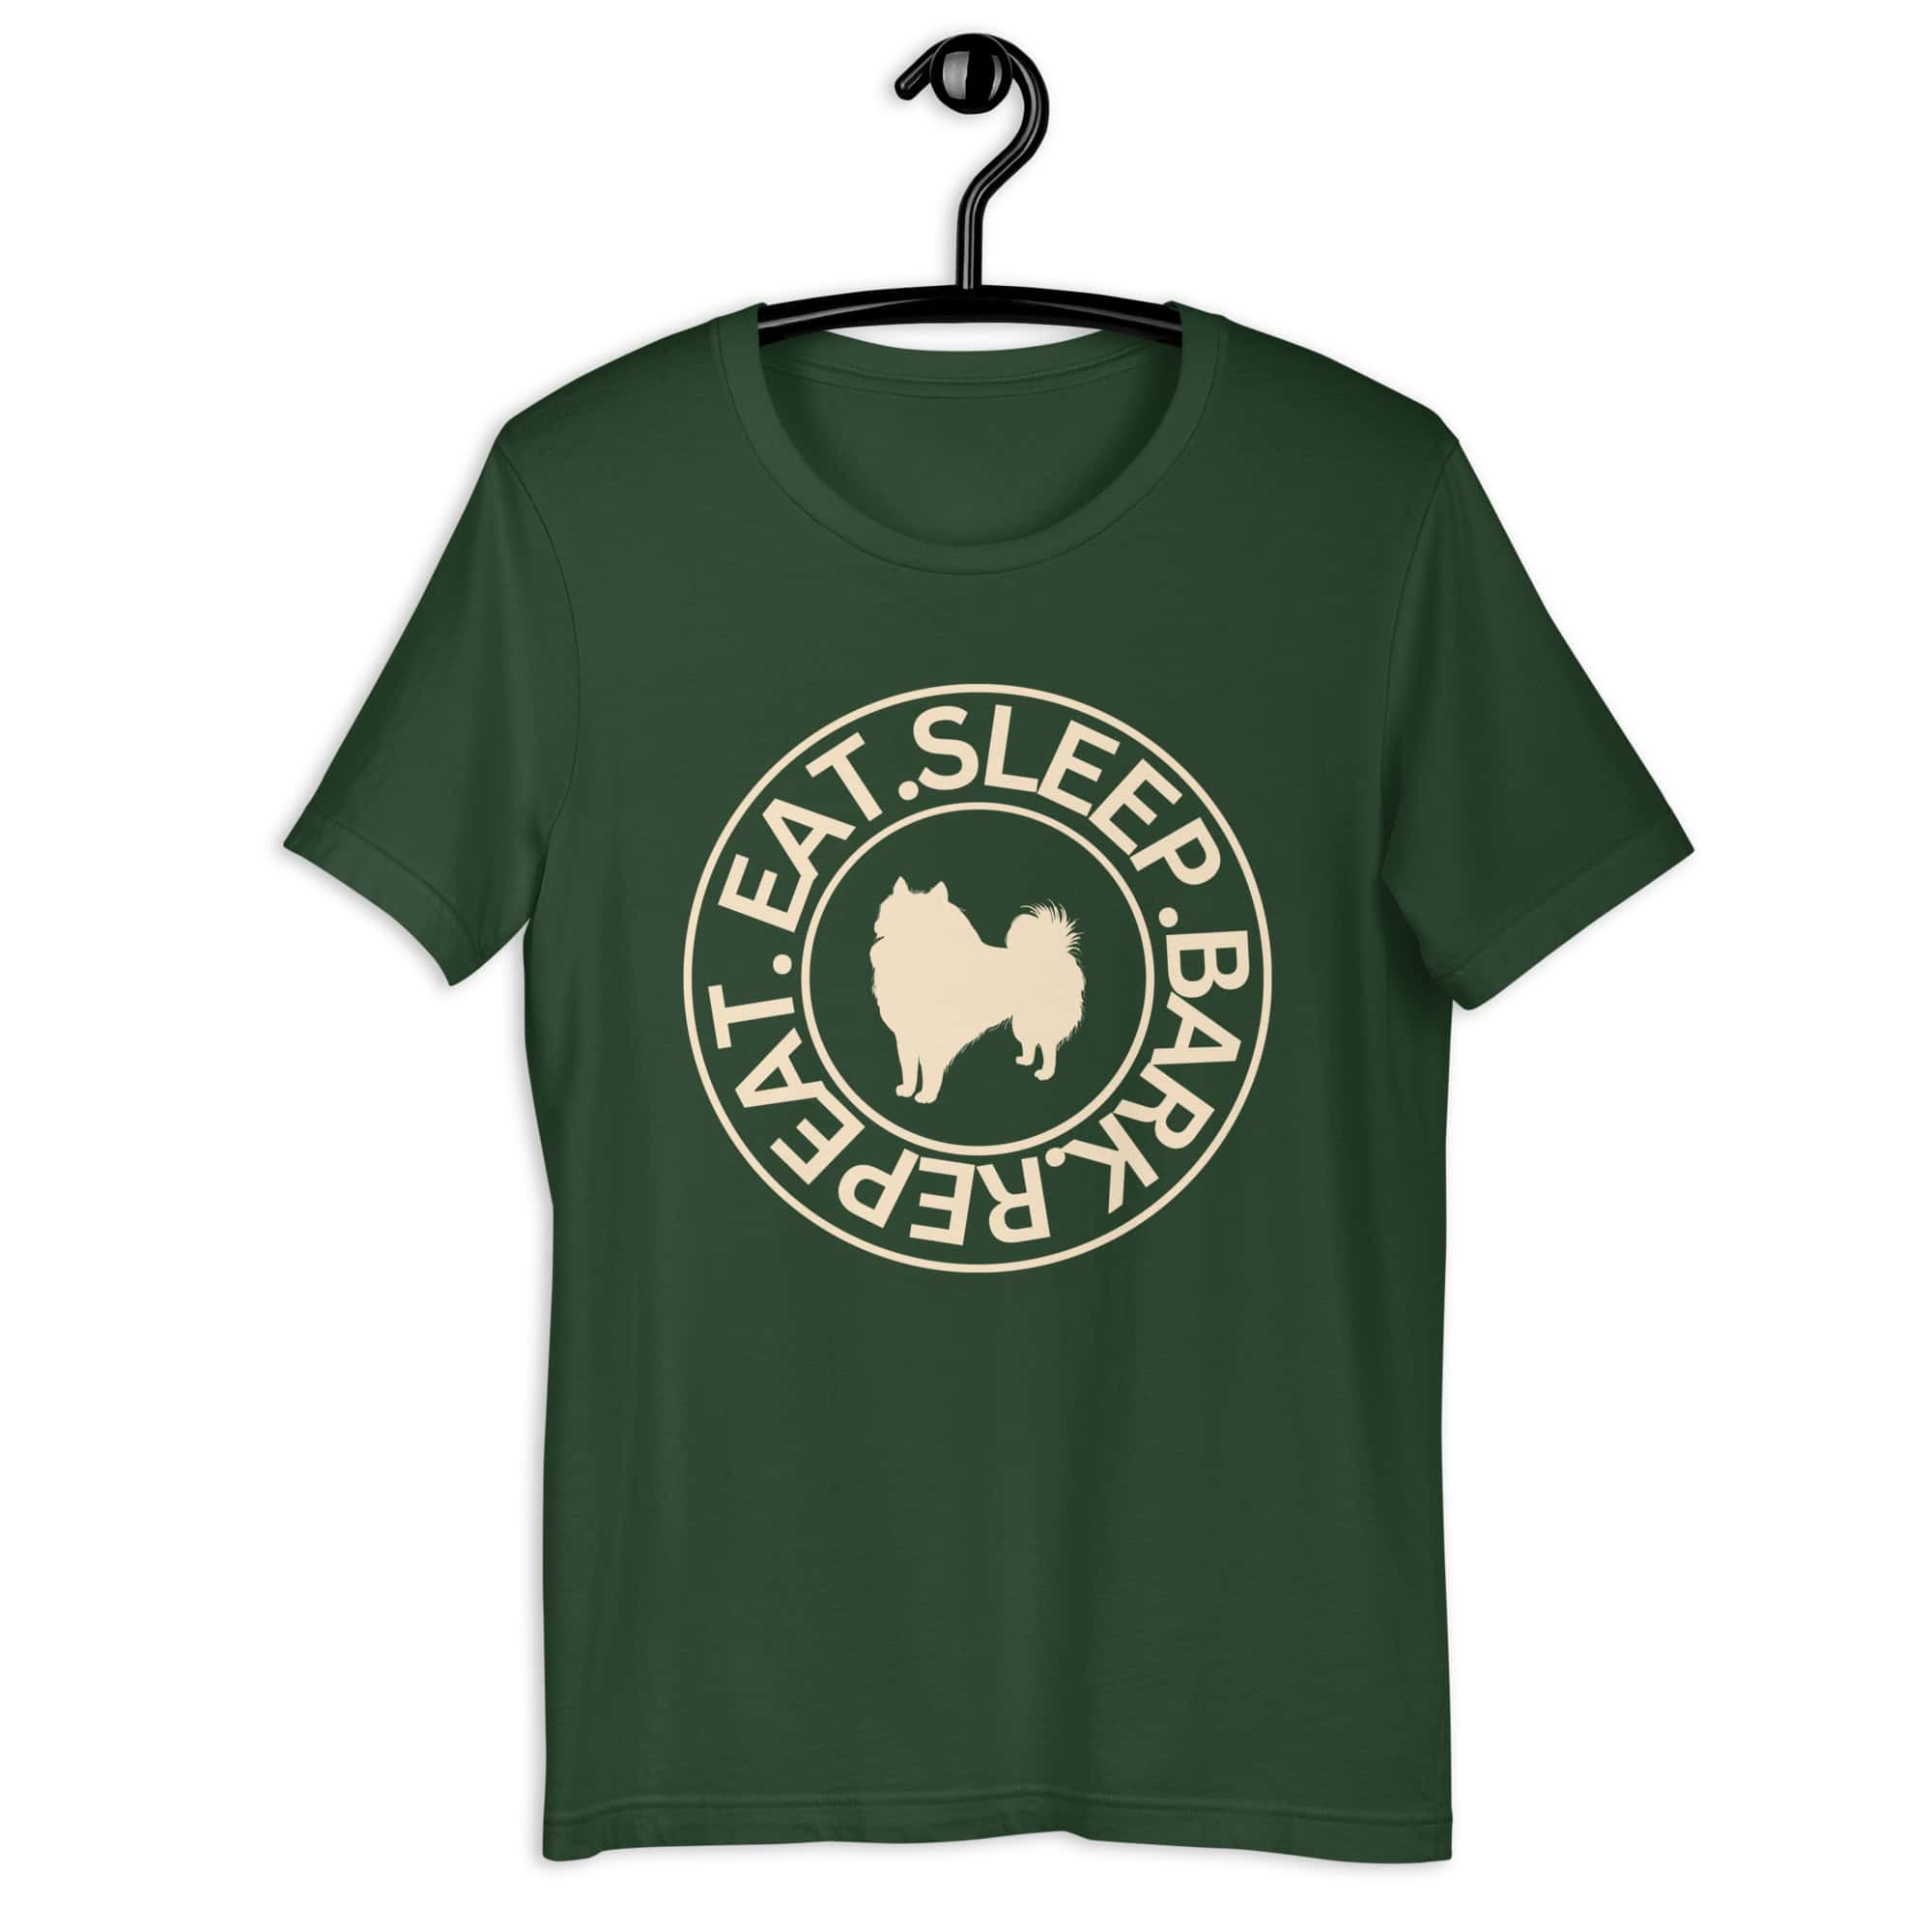 Eat Sleep Bark Repeat Poodle Unisex T-Shirt. Forest